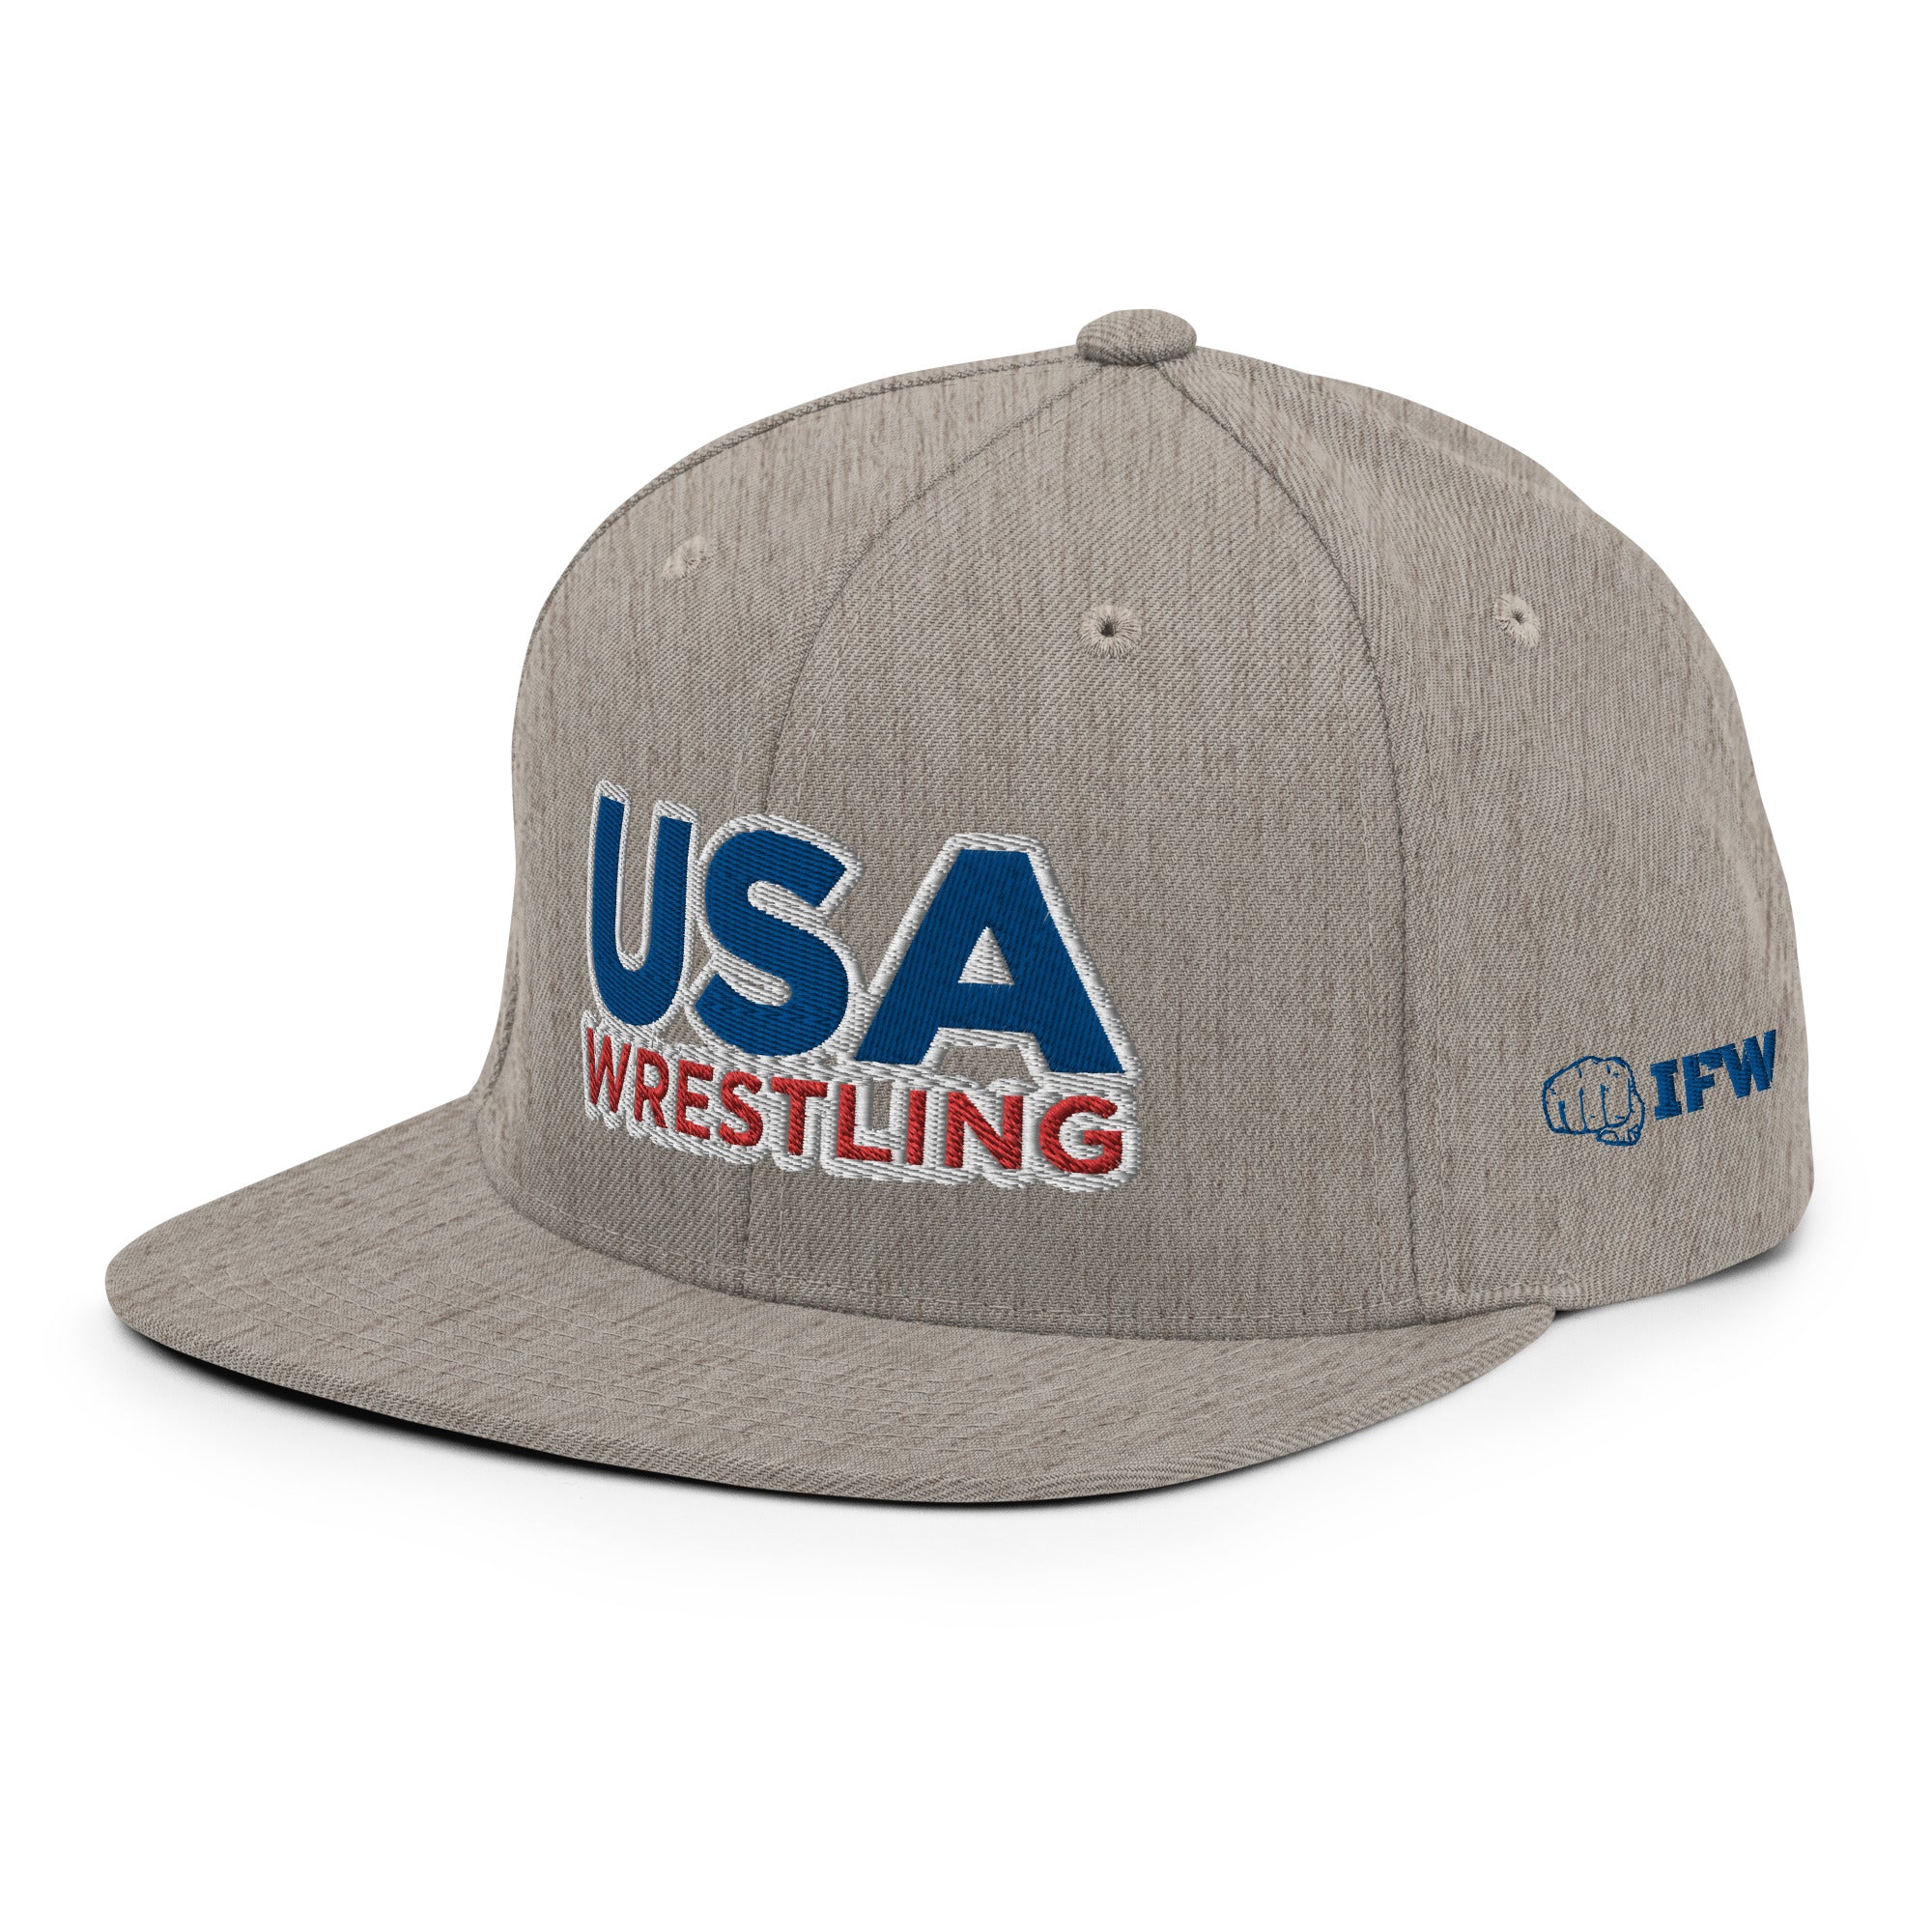 Usa Wrestling Snapback Hat